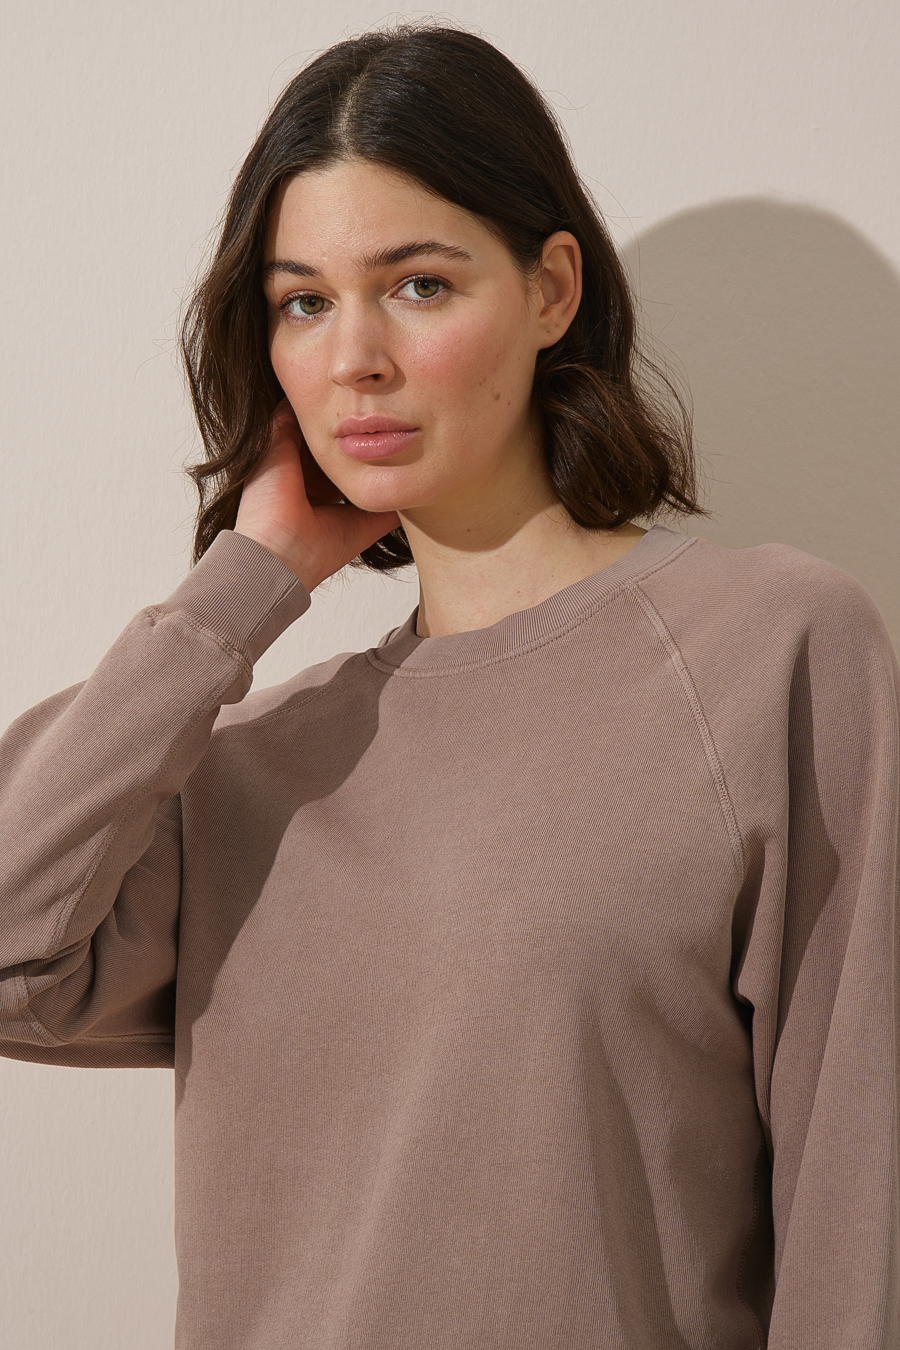 Garment-Dyed Raglan Sleeve Sweatshirt